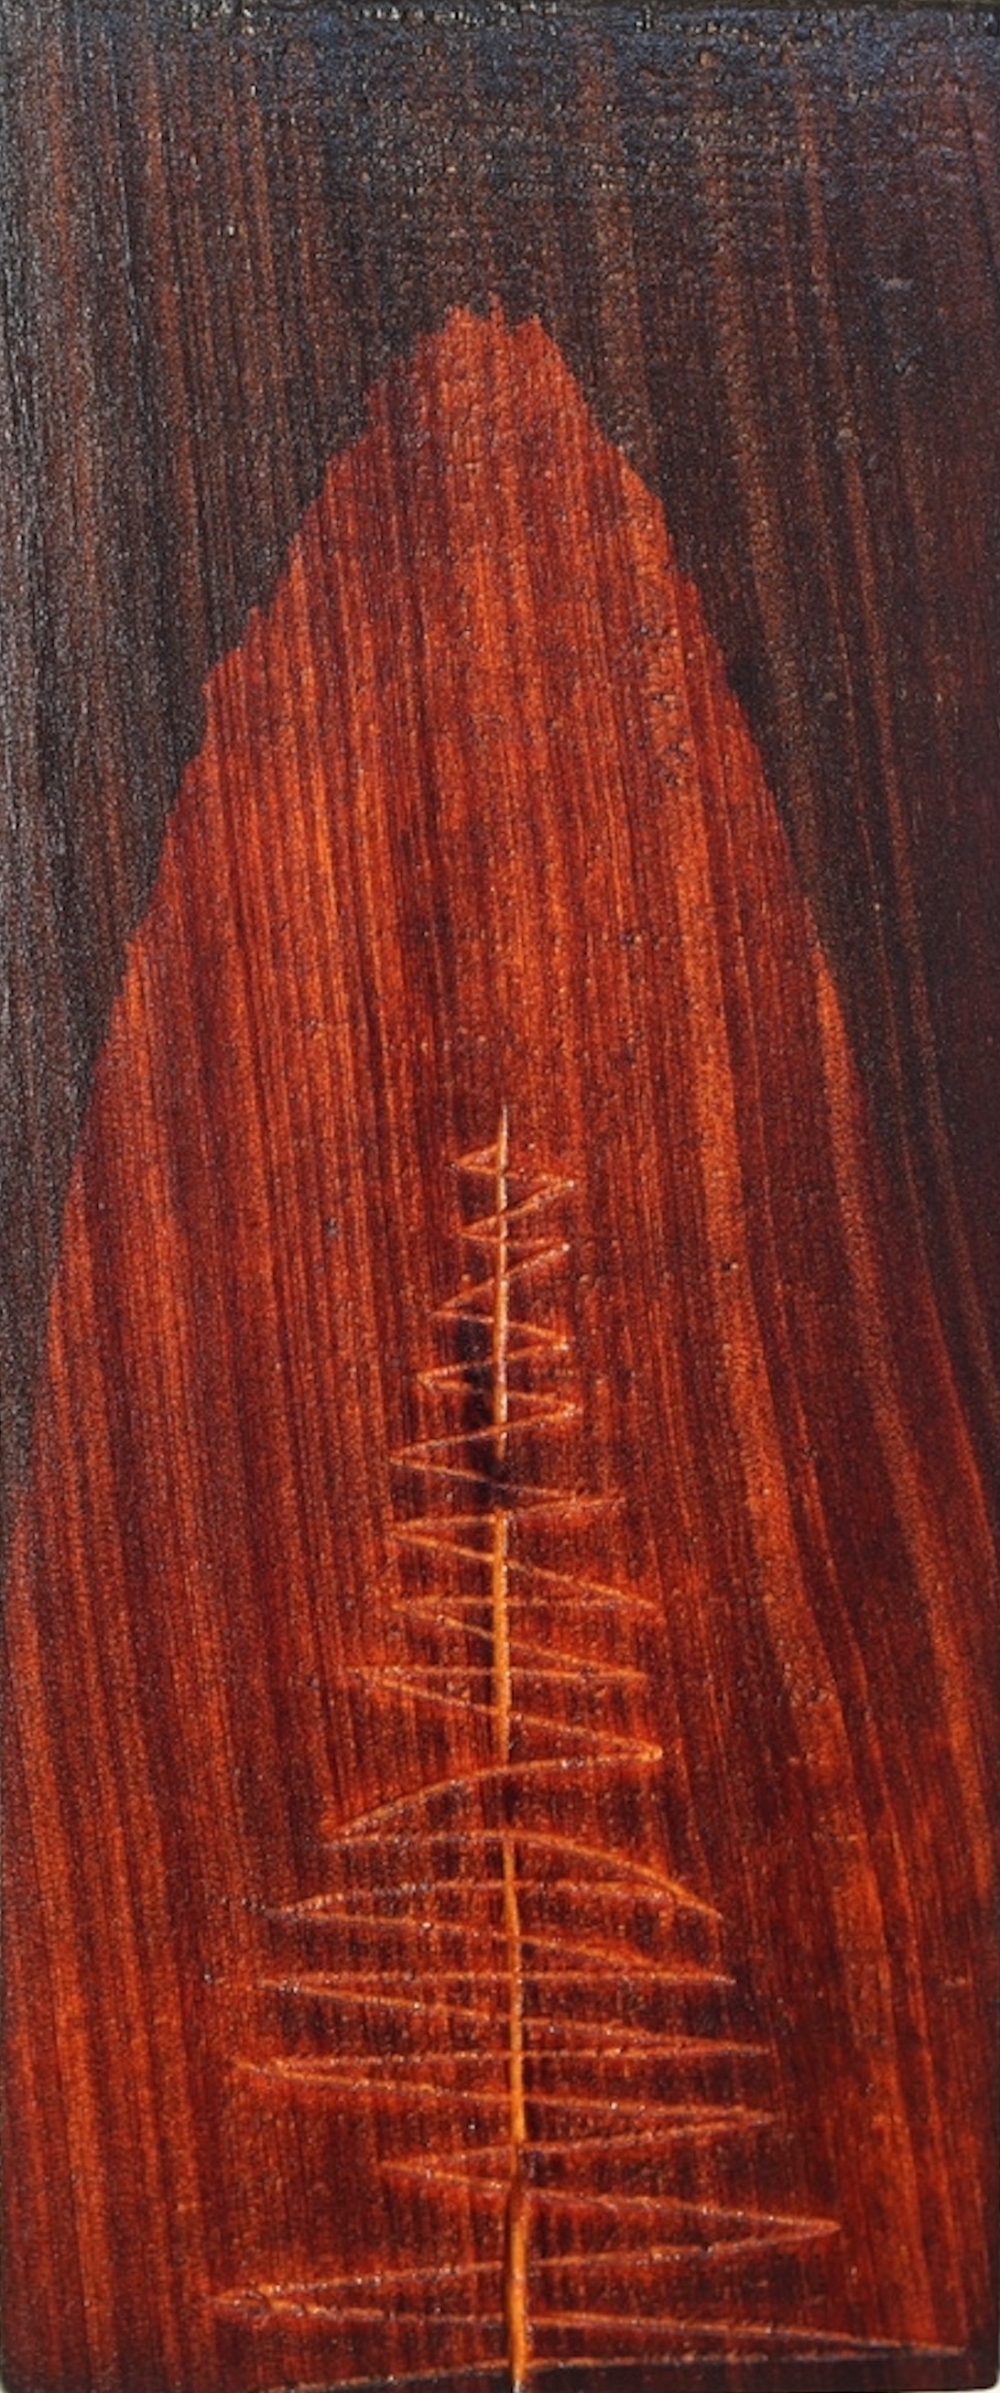 Single Tree (Tupelo), a